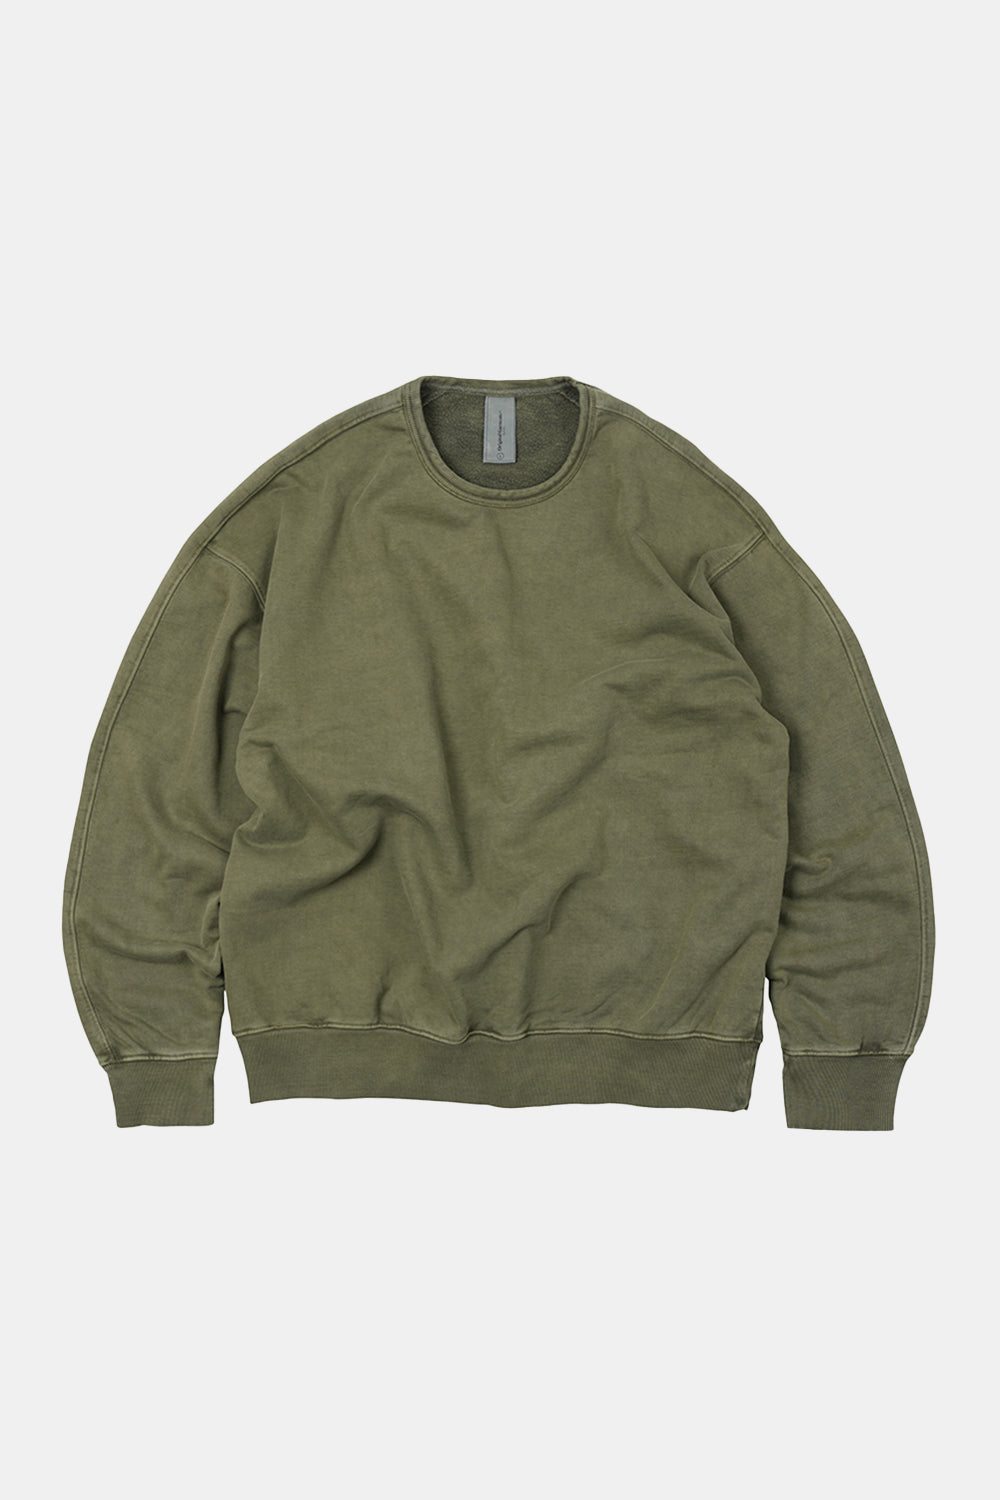 Frizmworks OG Pigment Dyeing Sweatshirt (Green)